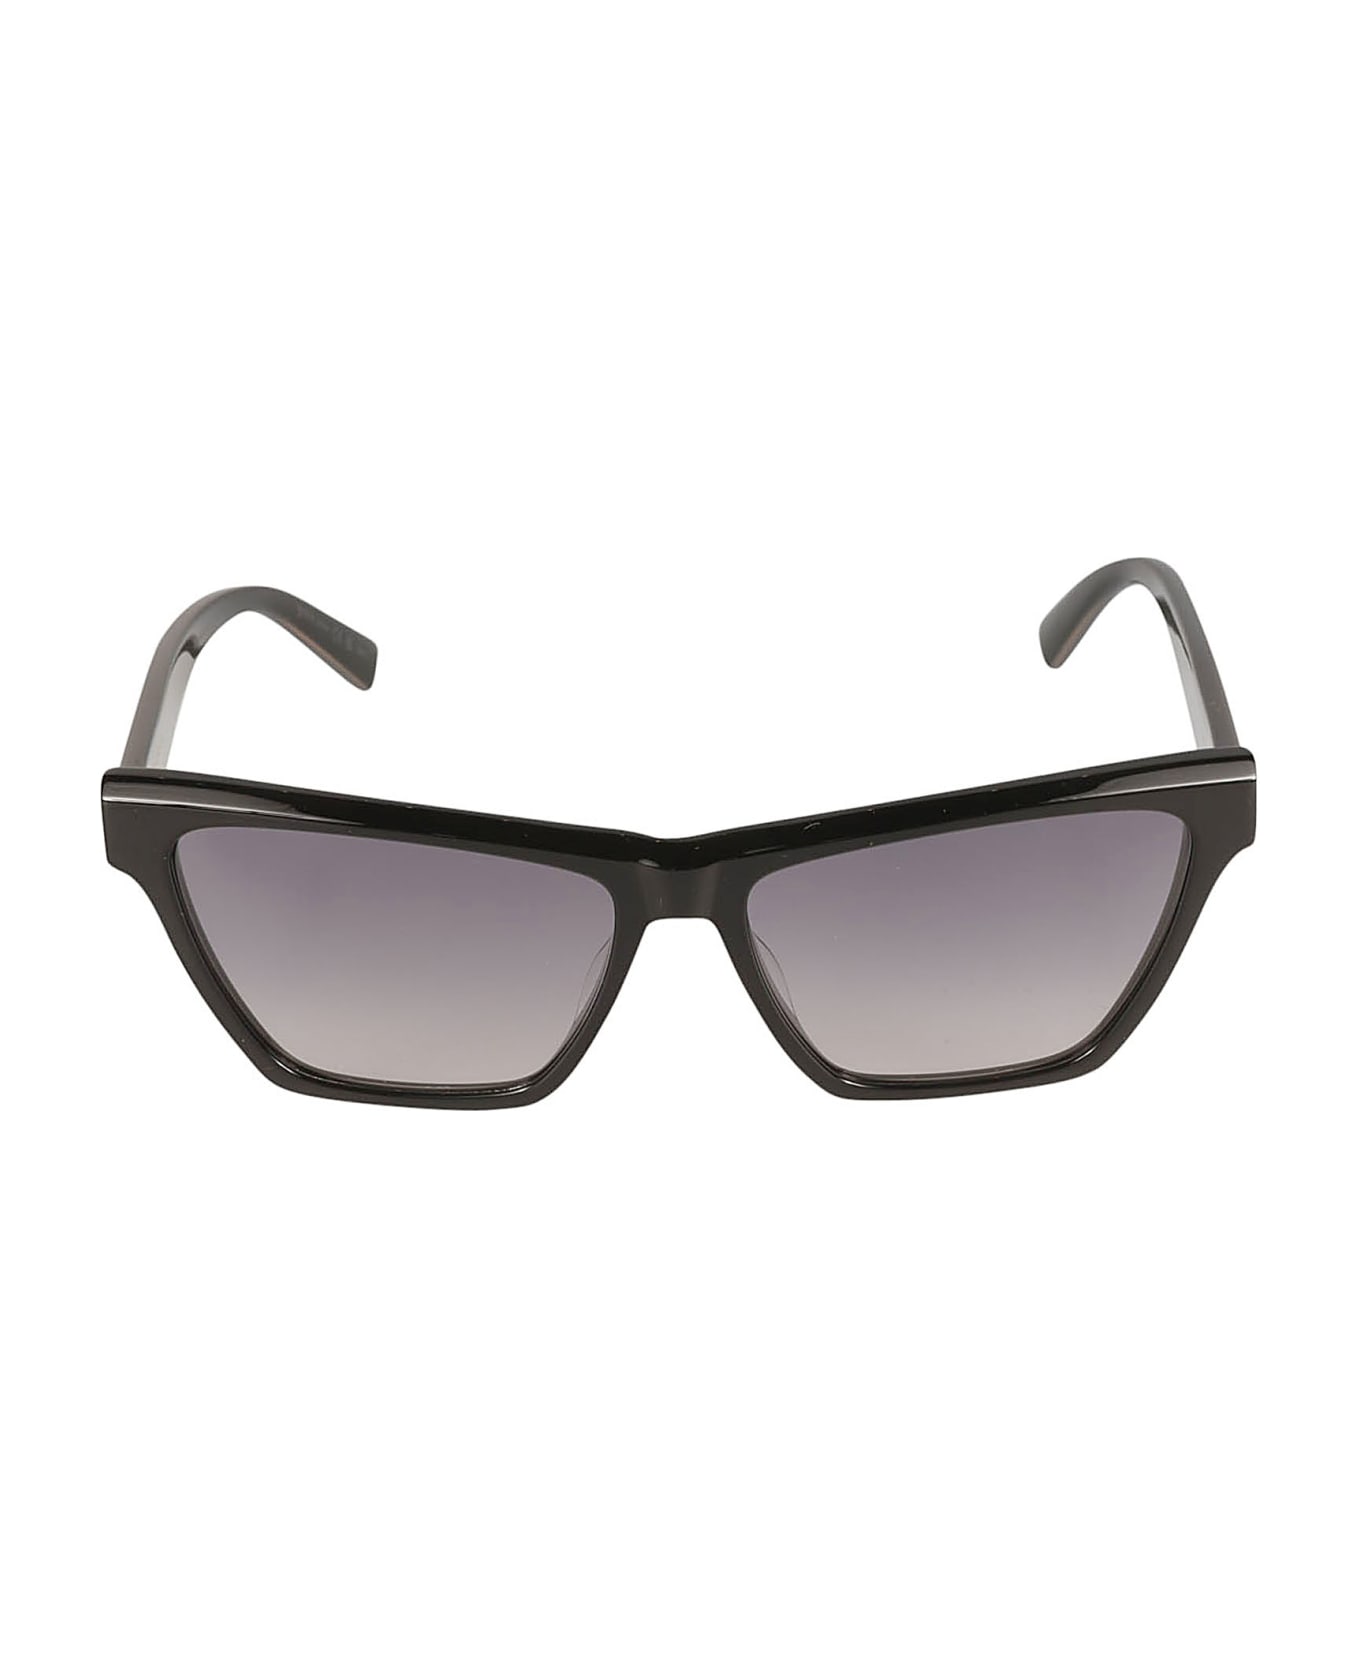 Saint Laurent Eyewear Ysl Plaque Square Frame Sunglasses - Black/Grey サングラス